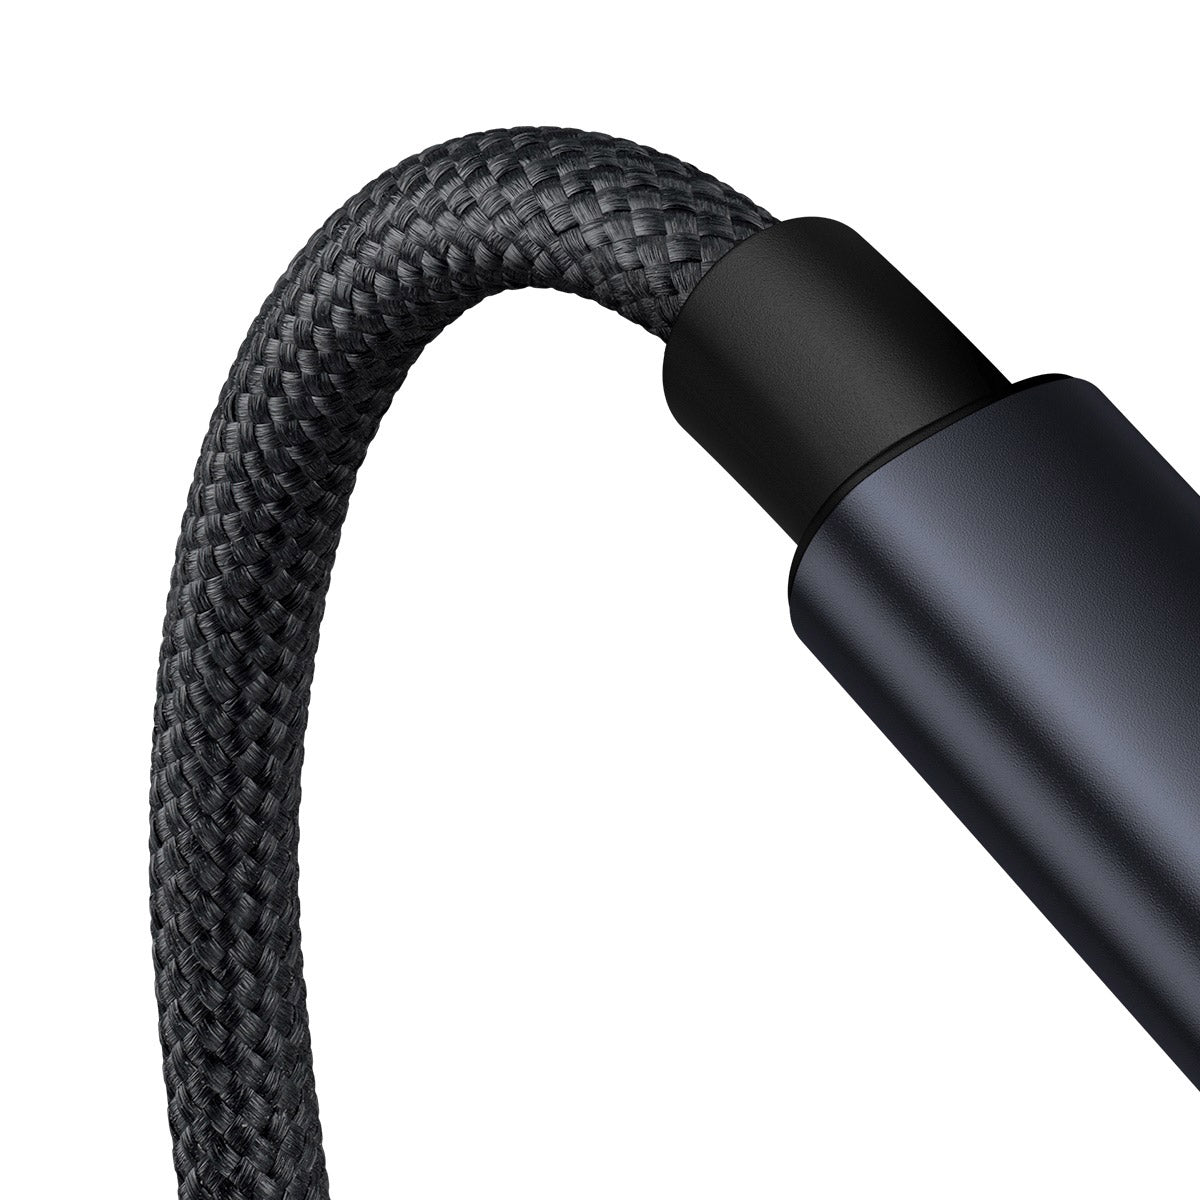 USB C to USB C Cable [3 ft] – Simply Carbon Fiber